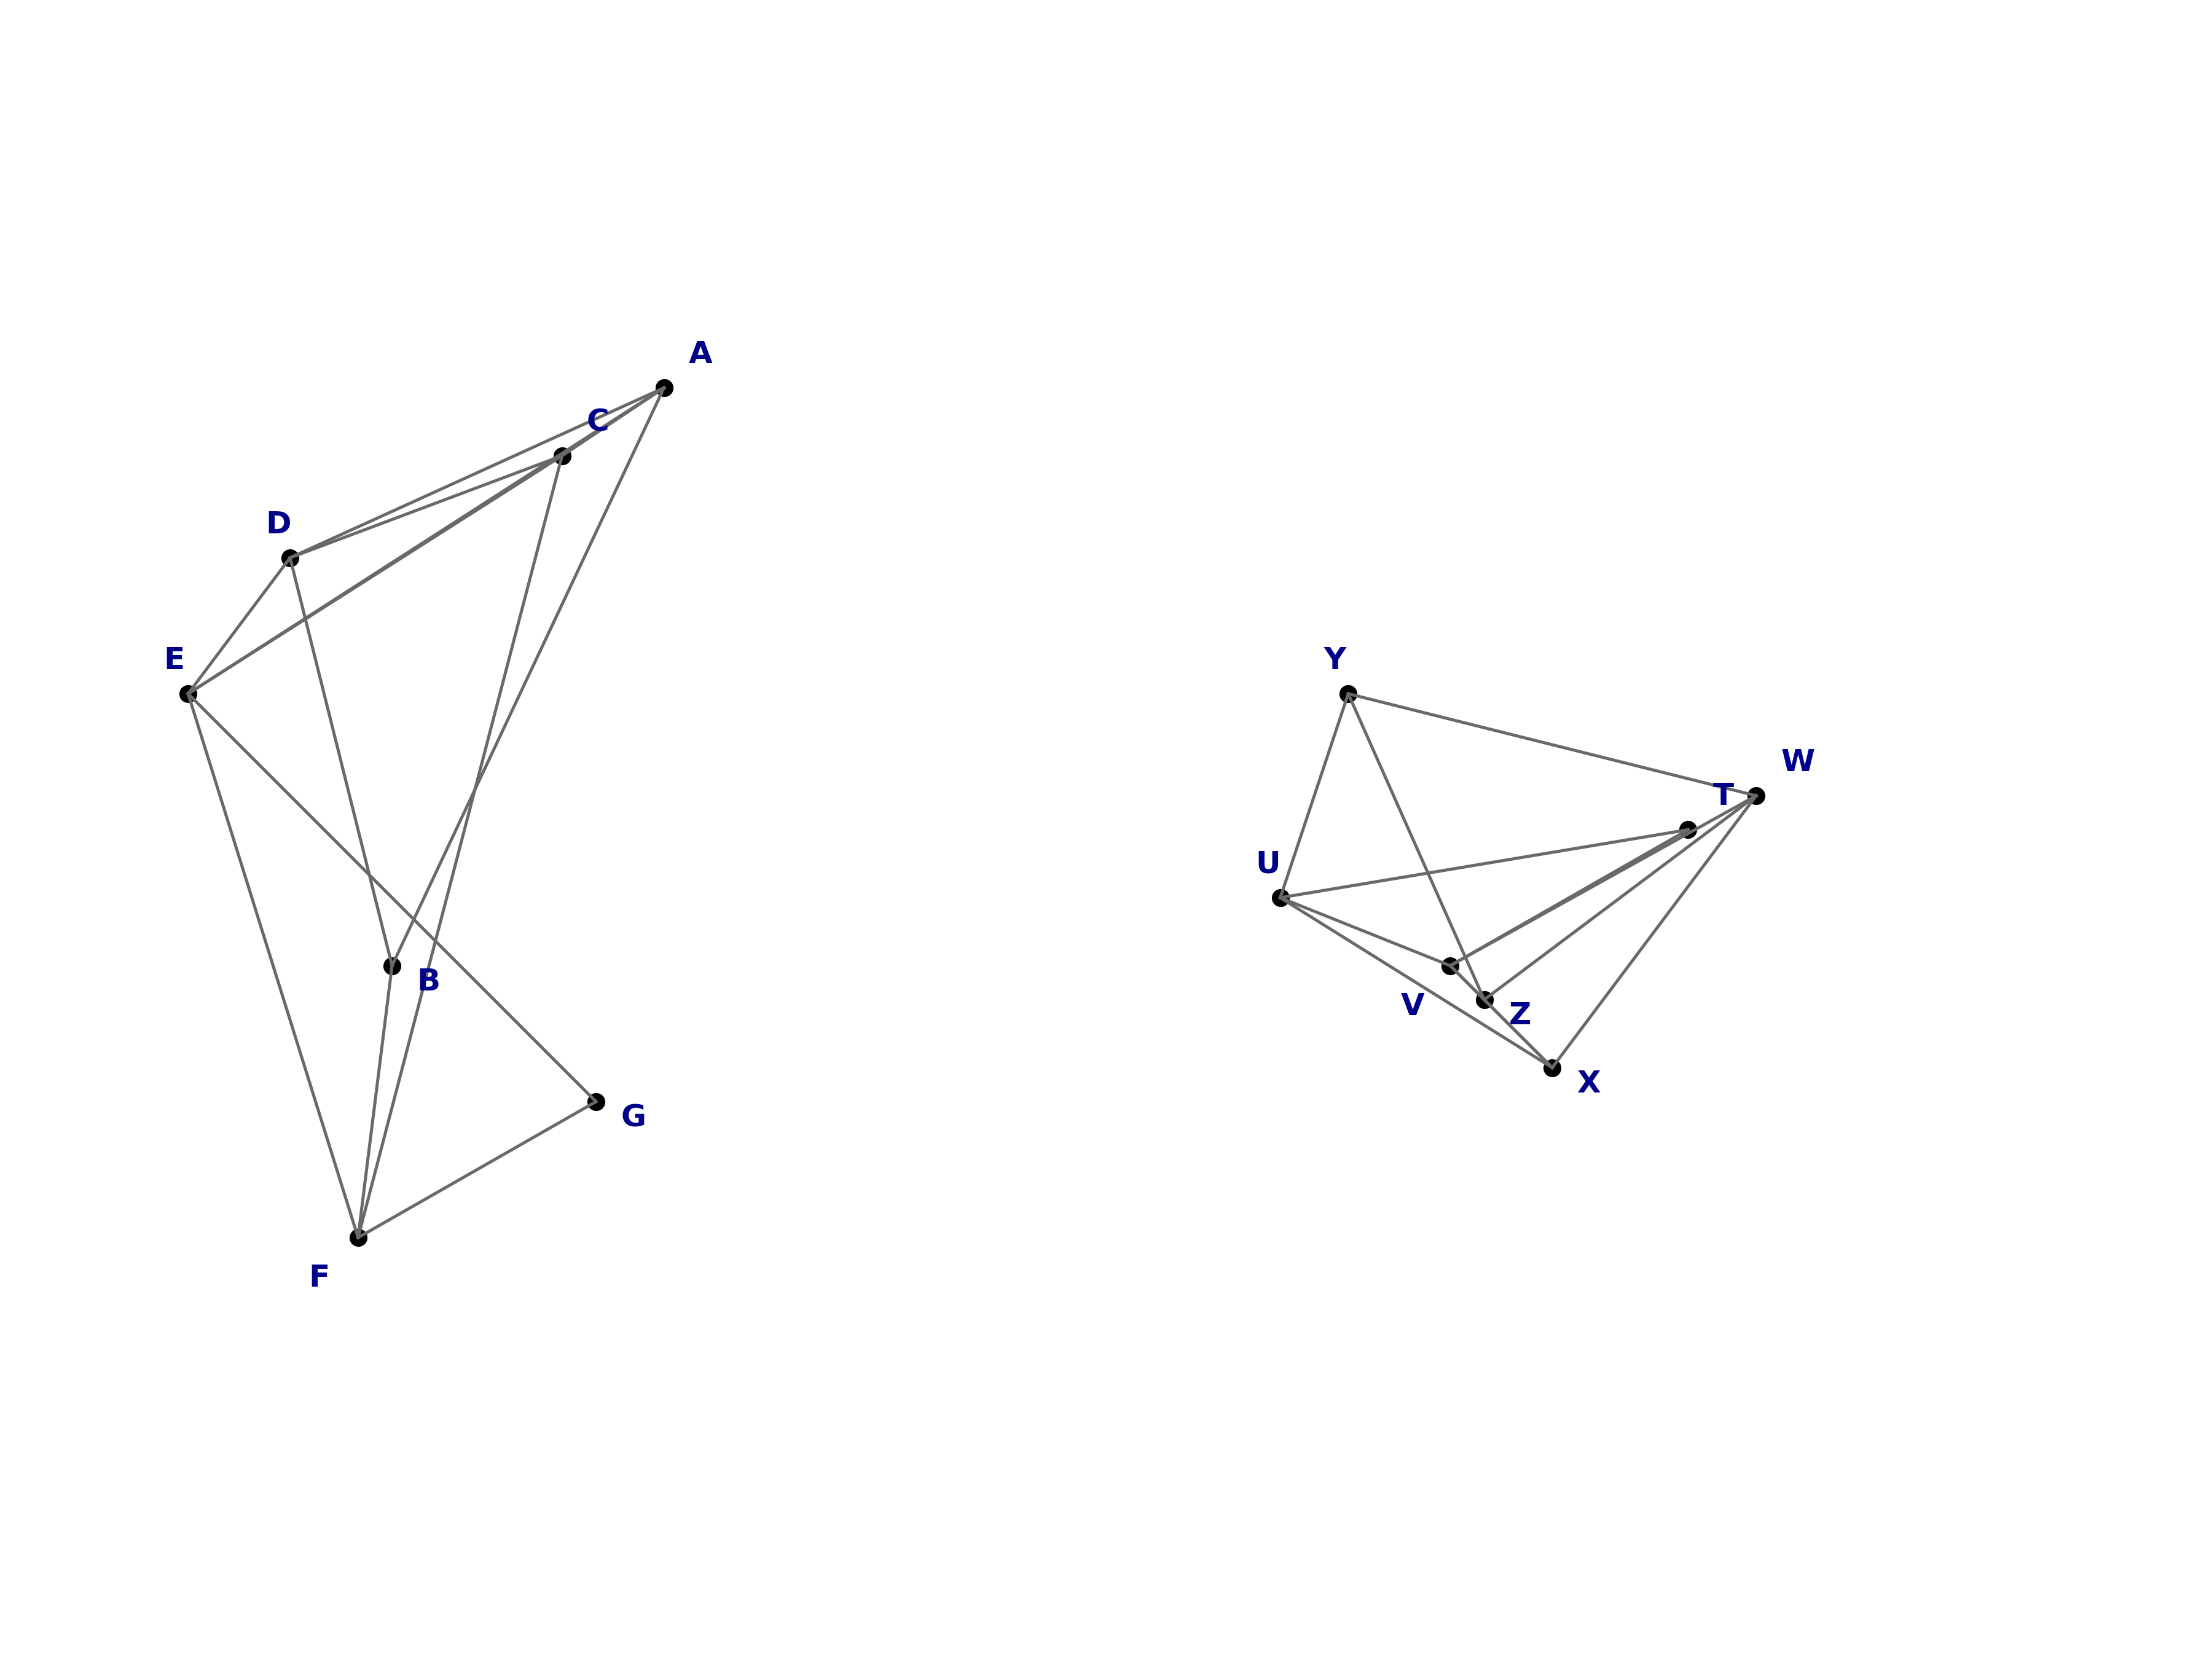 random isomorphic graphs